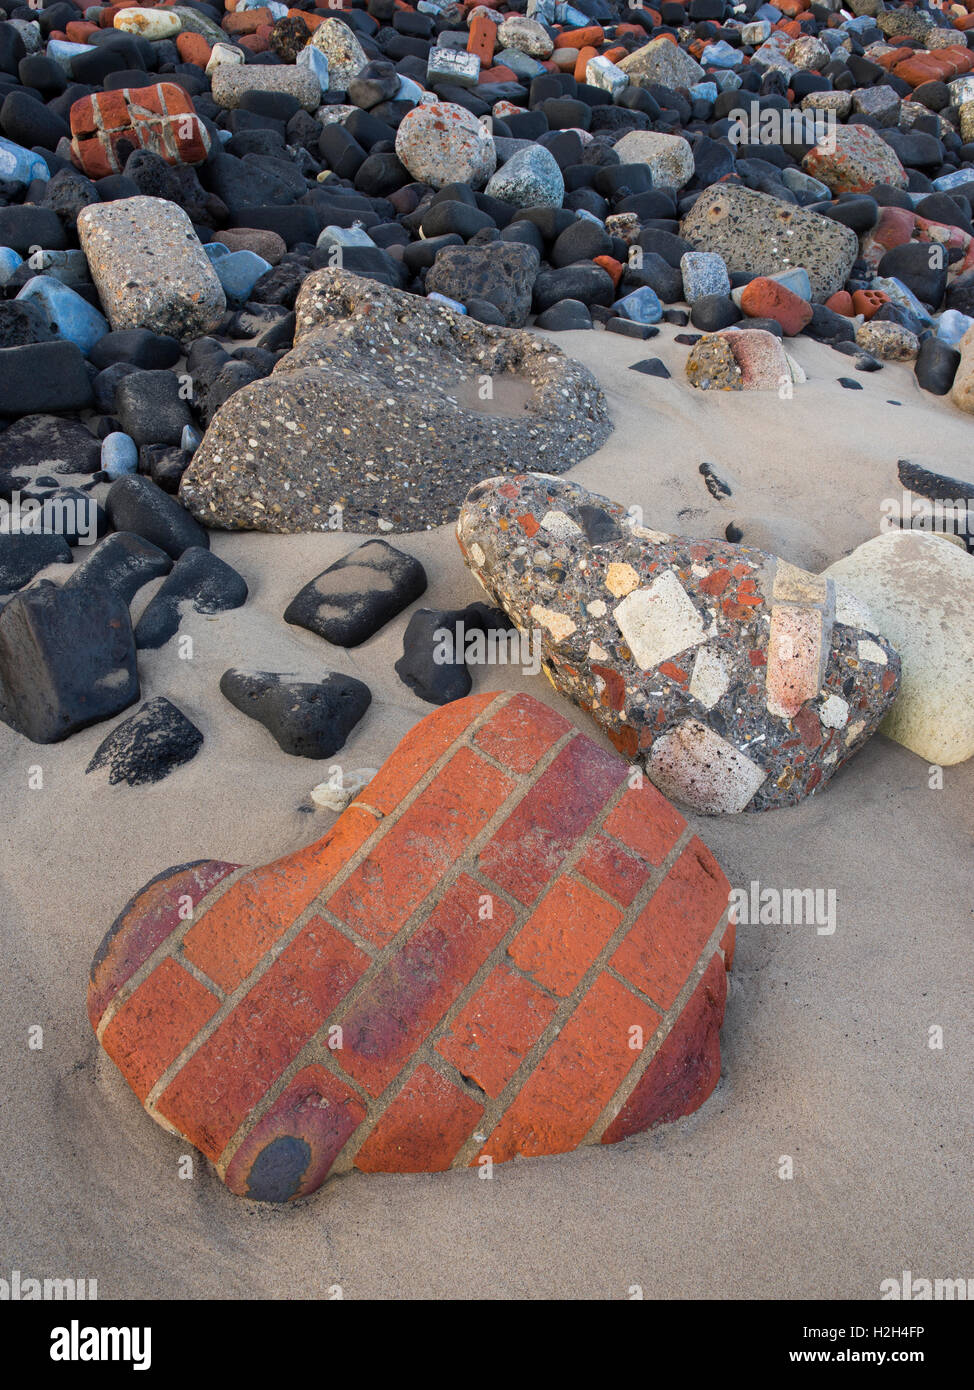 Industrial waste and litter strewn on the beach near Steetley Pier, Hartlepool, Teesside, Northeast of England, UK Stock Photo